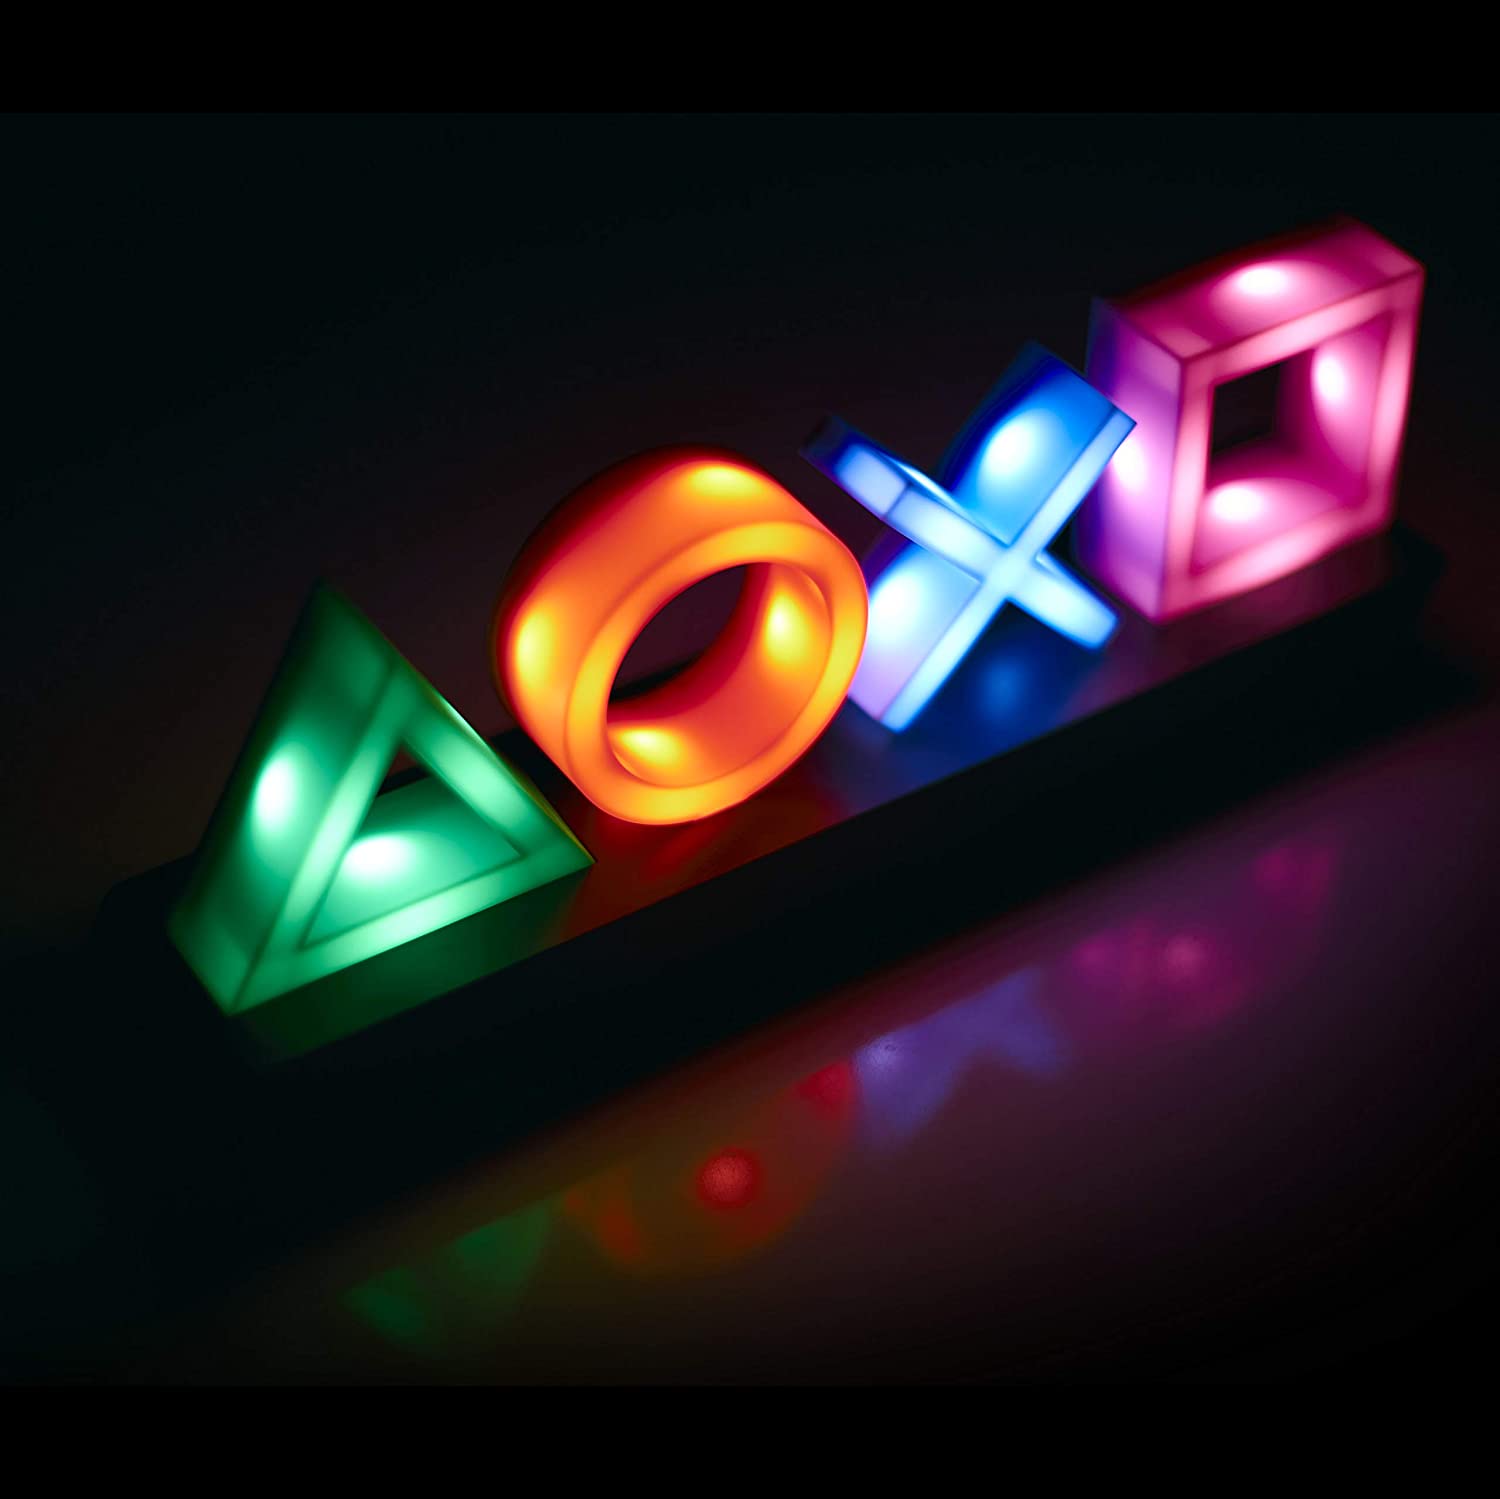 Playstation Lights AKA Playstation Icons Light